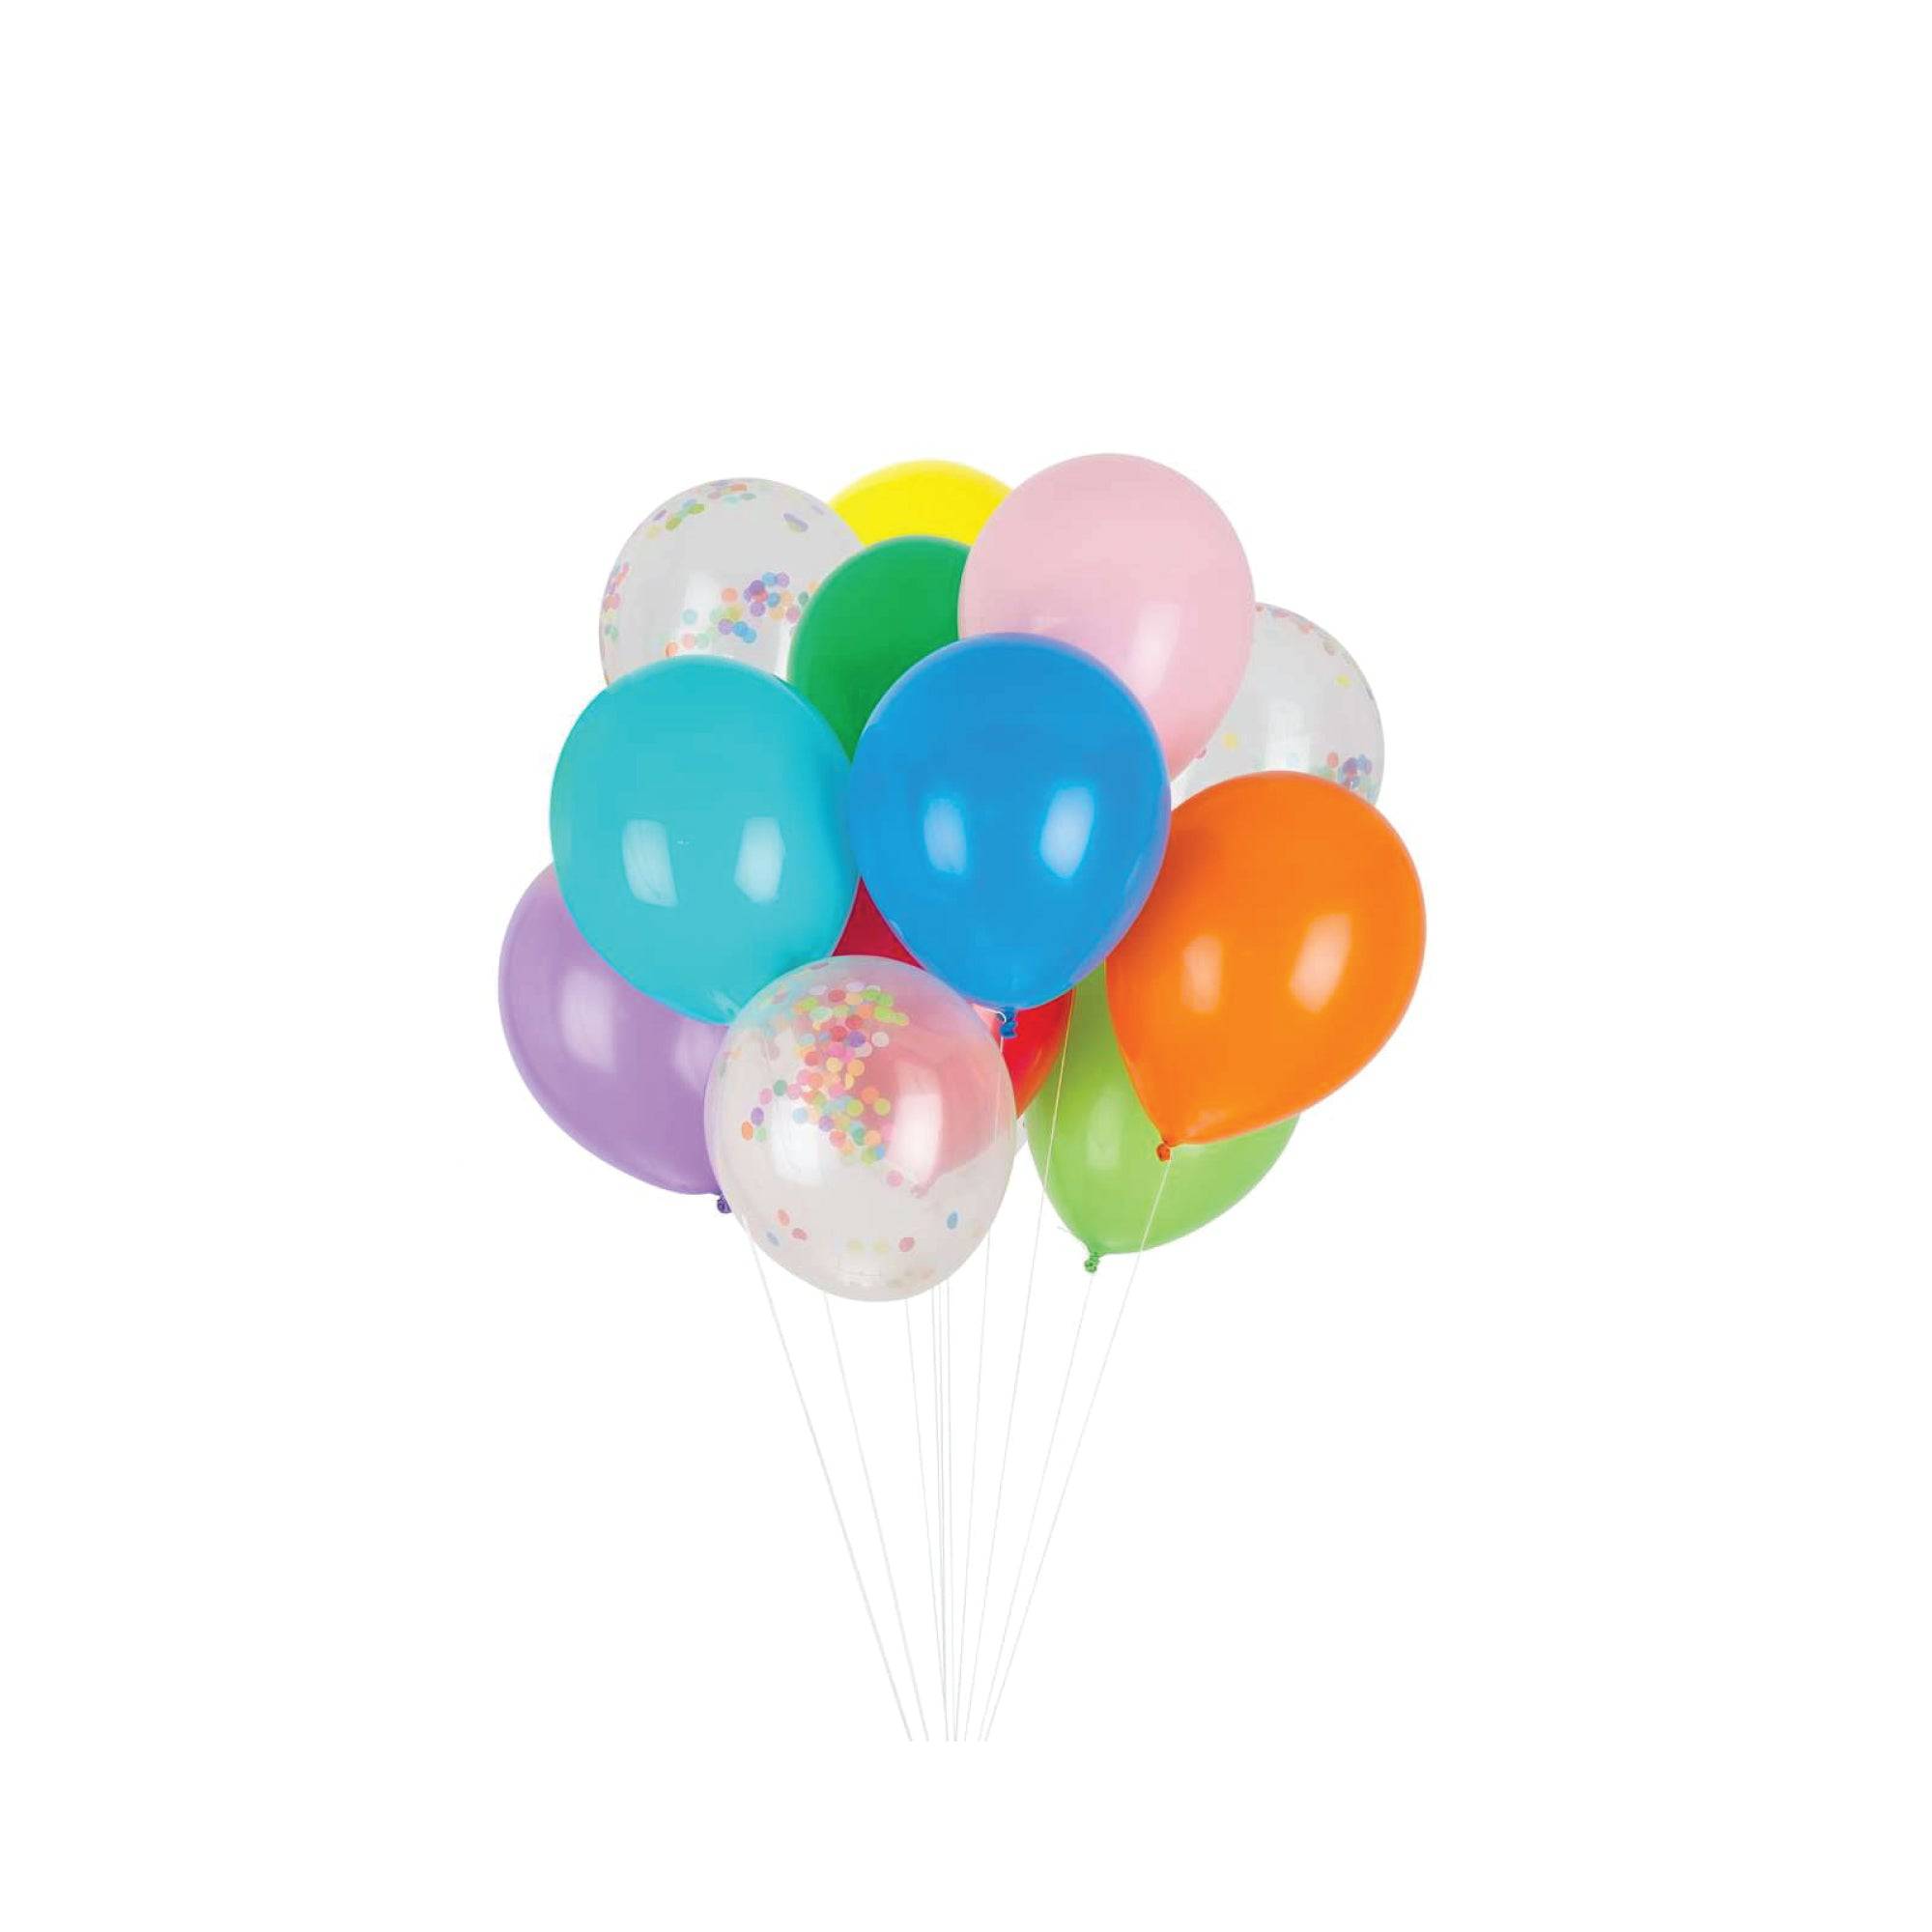 Slmeno Pastel Balloons 219pcs Pastel Balloon Garland Kit Different Sizes 18 10 5 inch Pastel Rainbow Balloons Daisy Balloons, First Birthday